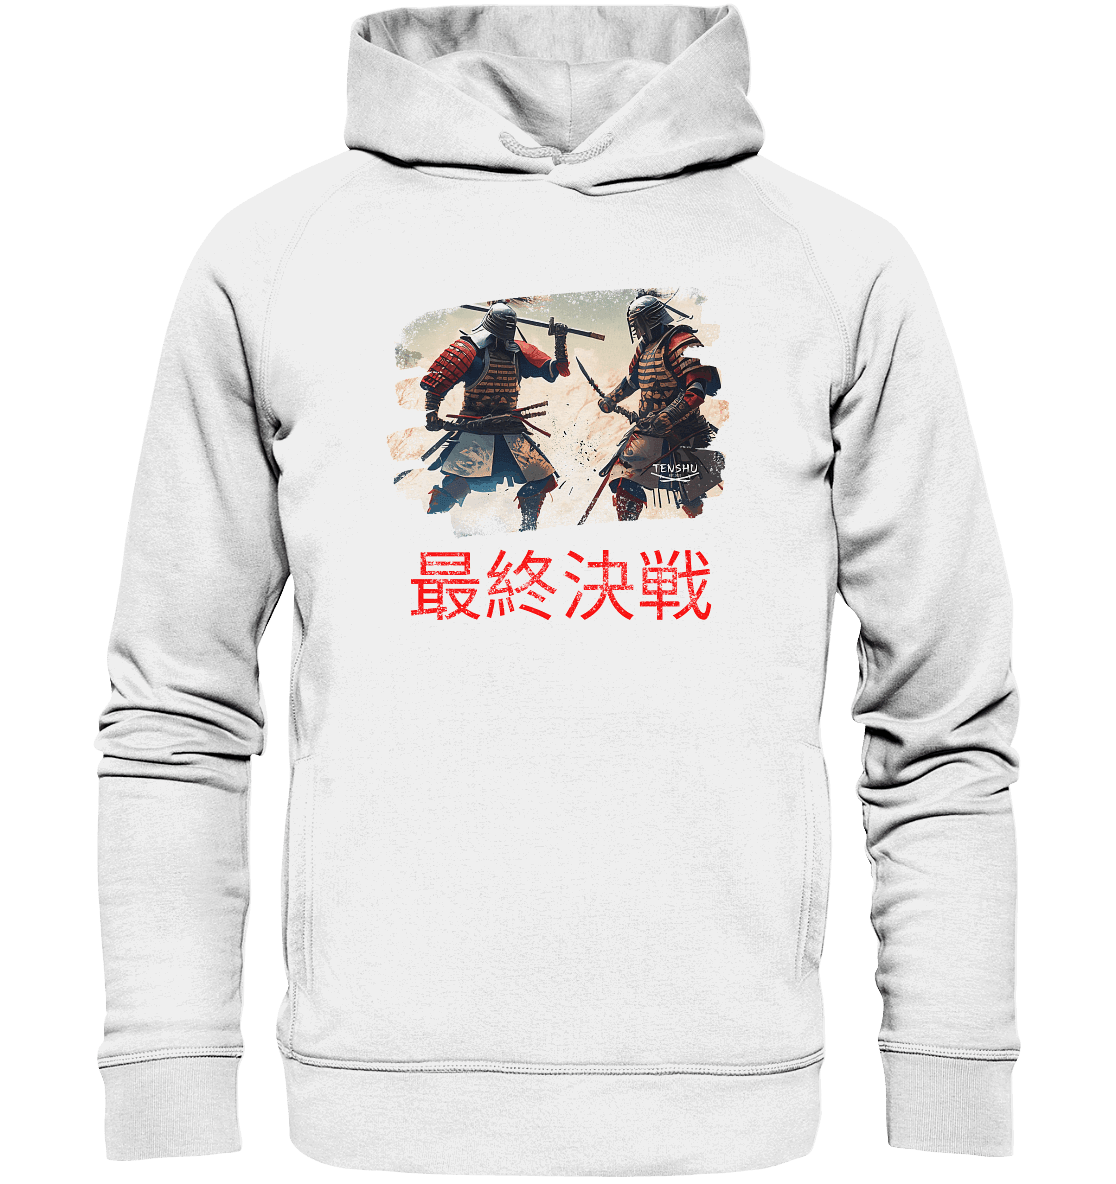 Tenshu / Endkampf - Organic Fashion Hoodie